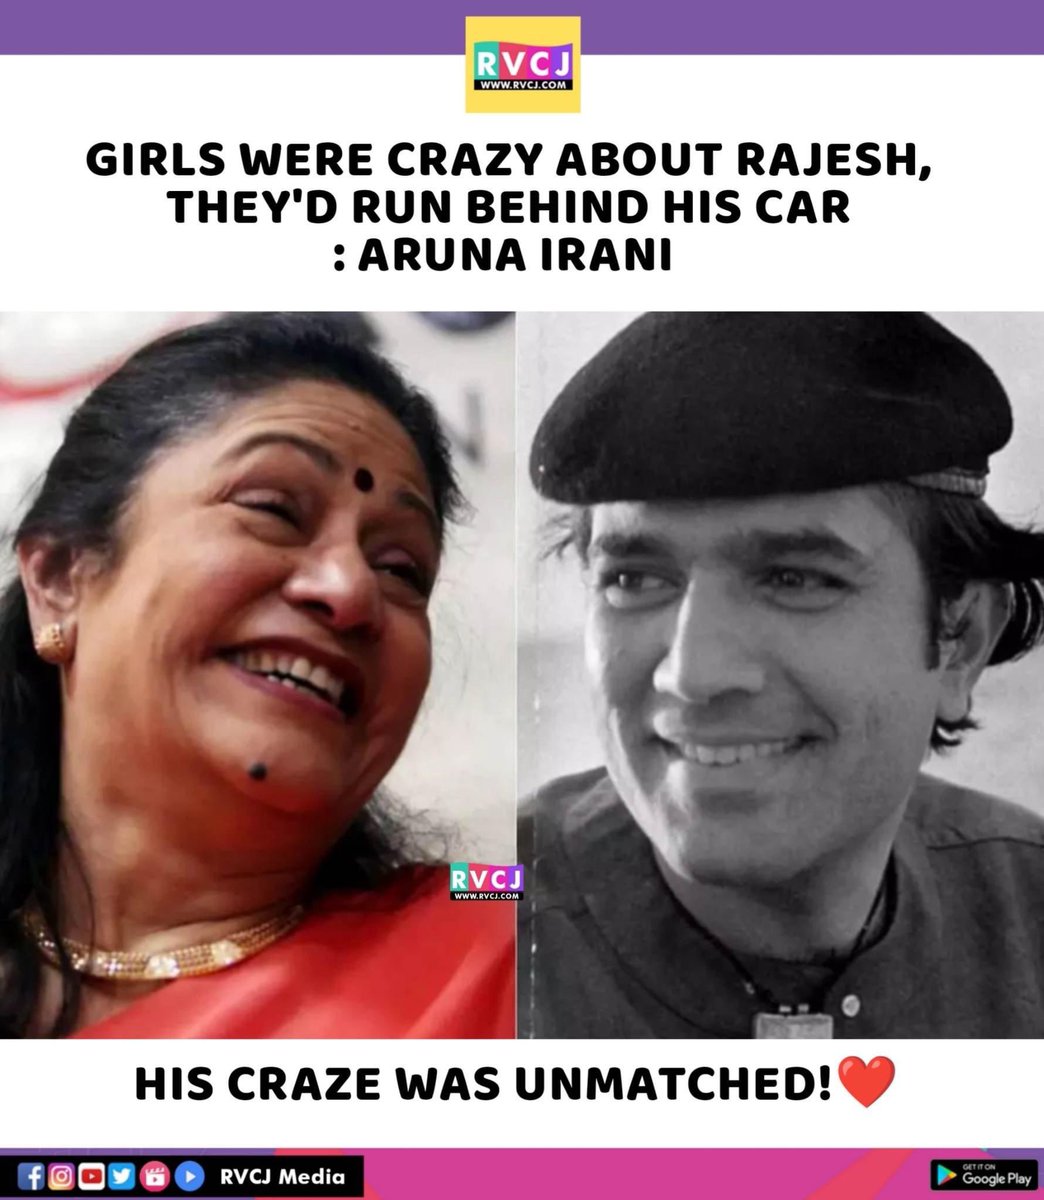 The first superstar!
#rajeshkhanna #arunairani #bollywood #rvcjmovies